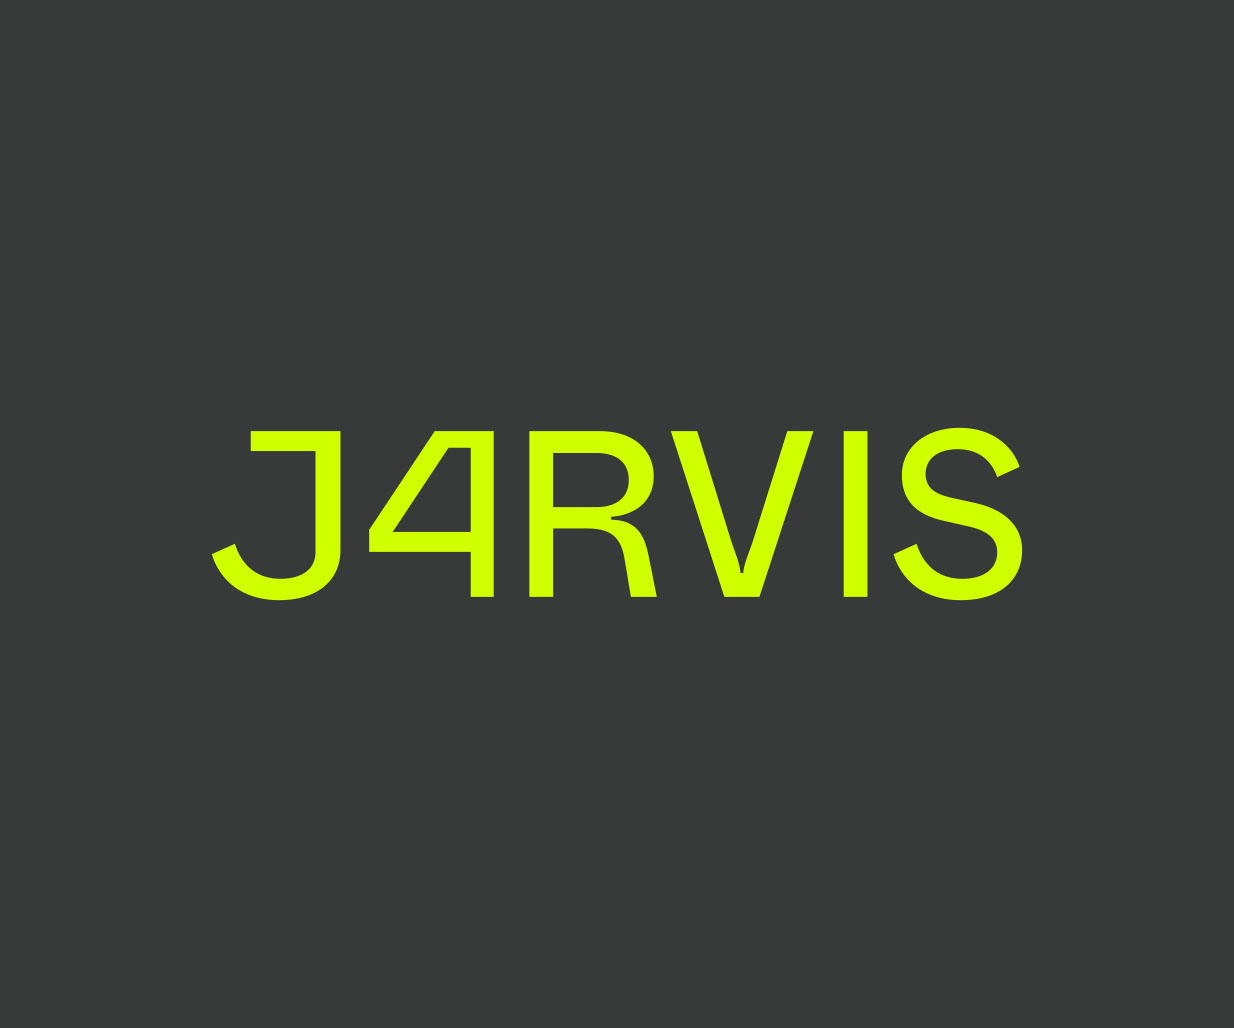 Percept Selected From Branding Agencies for J4RVIS Brand Identity